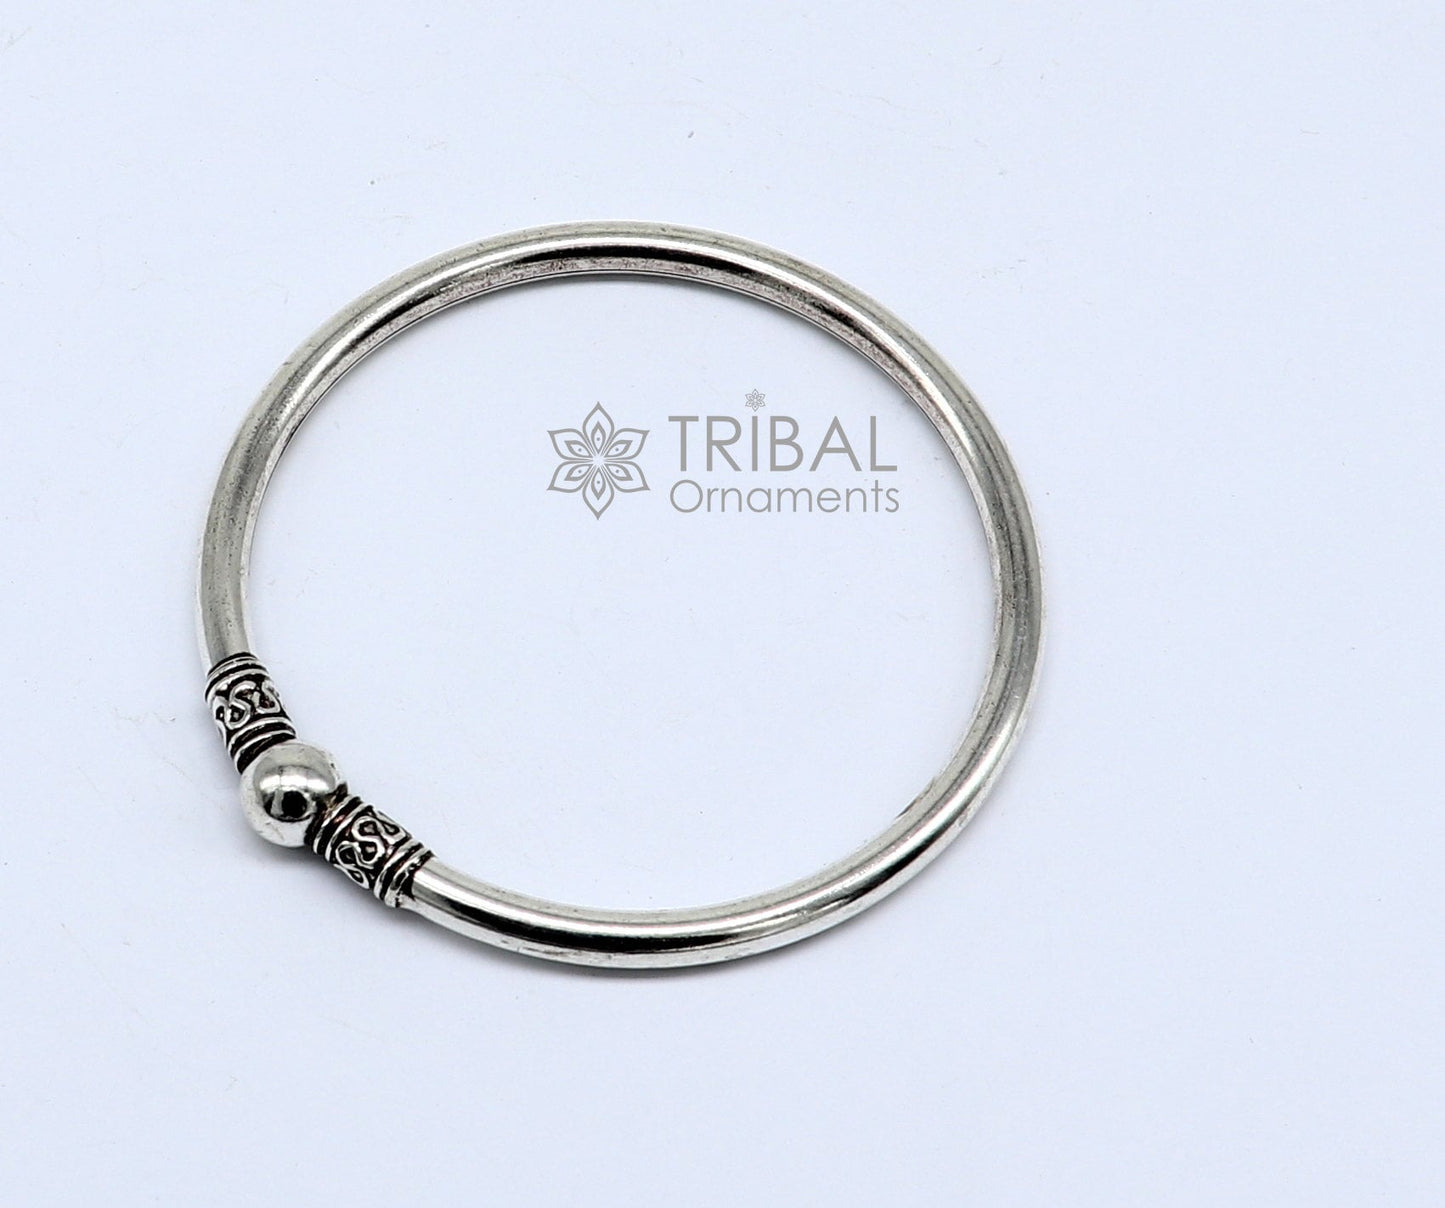 925 sterling silver handmade plain shiny design cultural trendy kada bracelet for both men's and girl's, best delicate wrist jewelry nsk660 - TRIBAL ORNAMENTS